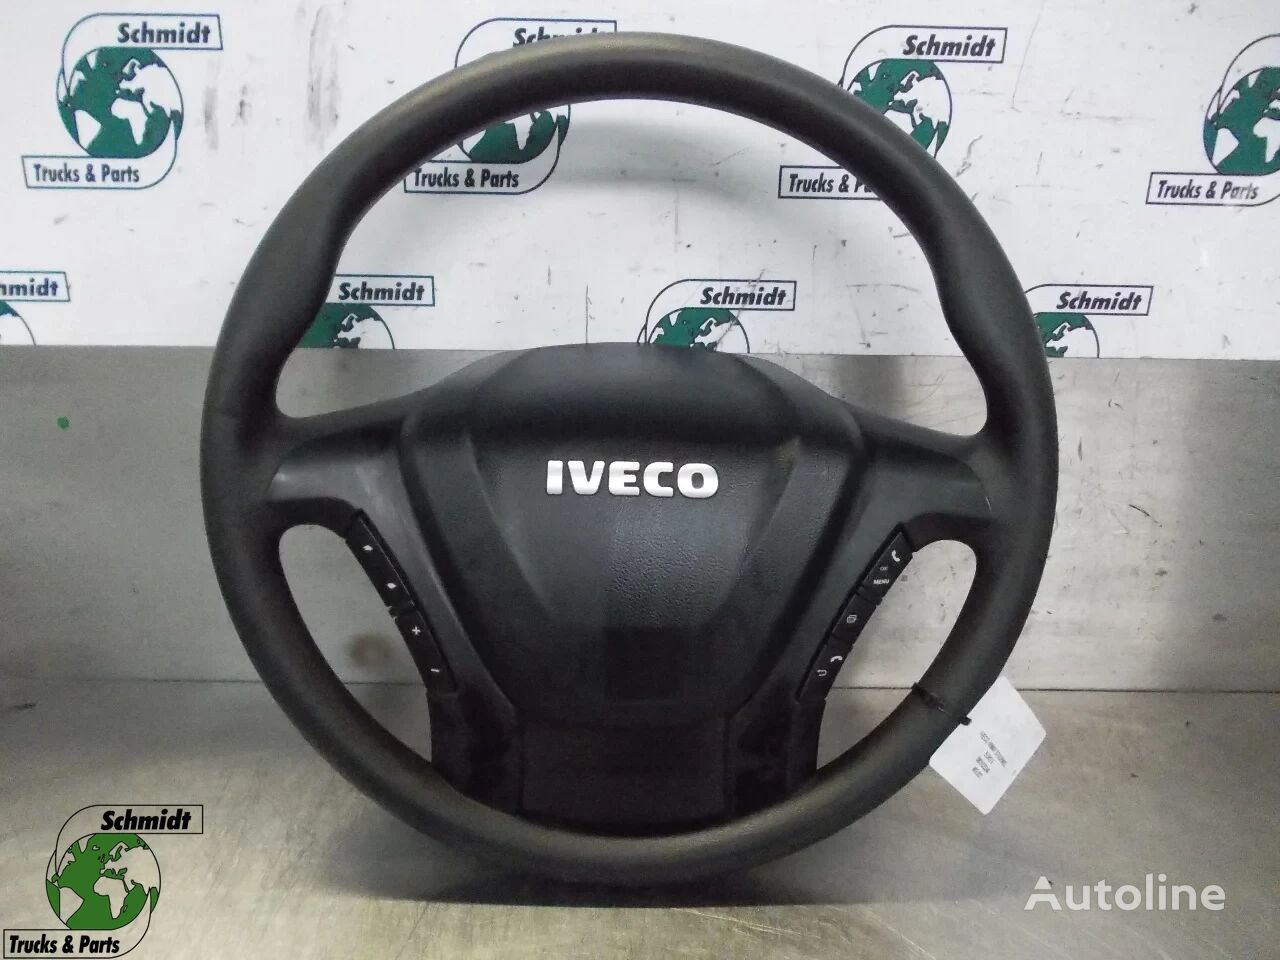 IVECO HIWAY STUURWIEL EURO 6 5801525246 steering wheel for truck